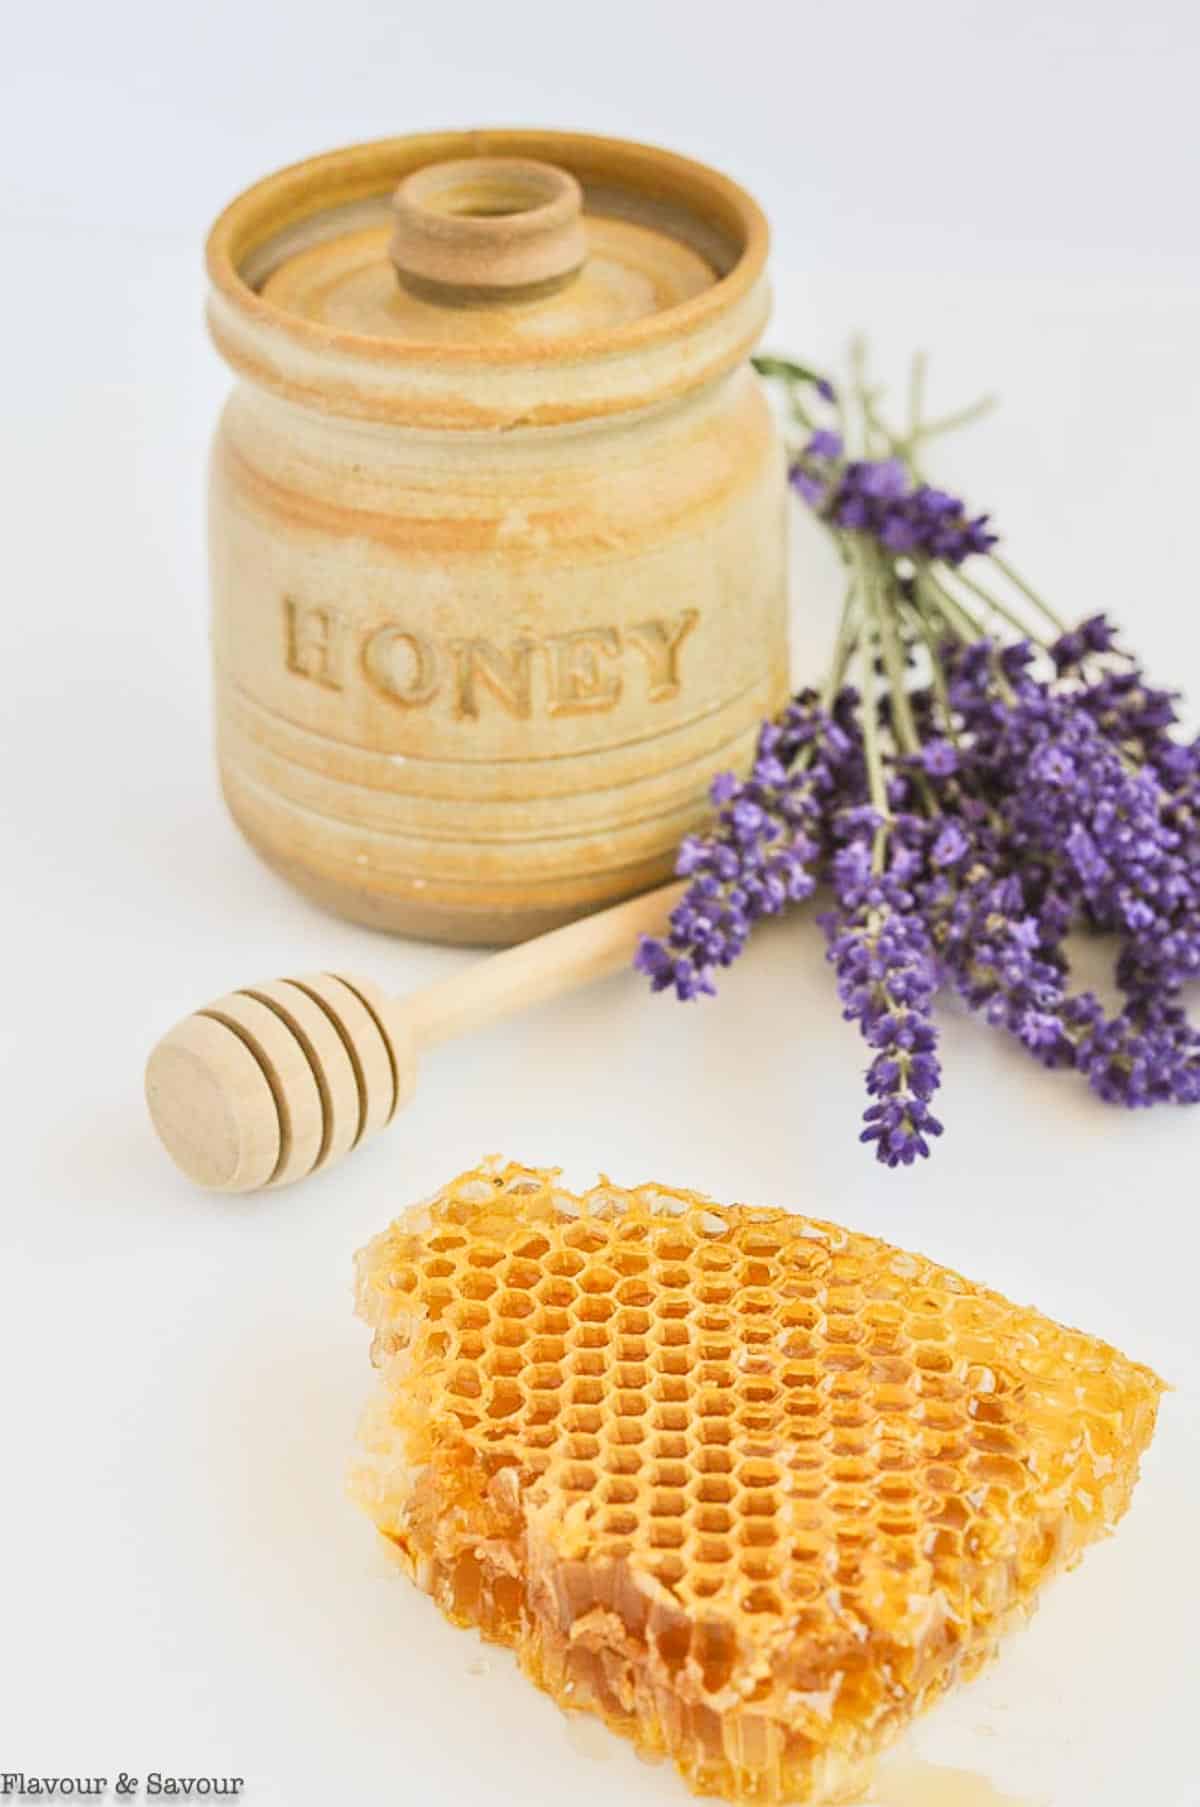 A honey pot, fresh lavender and honeycomb.